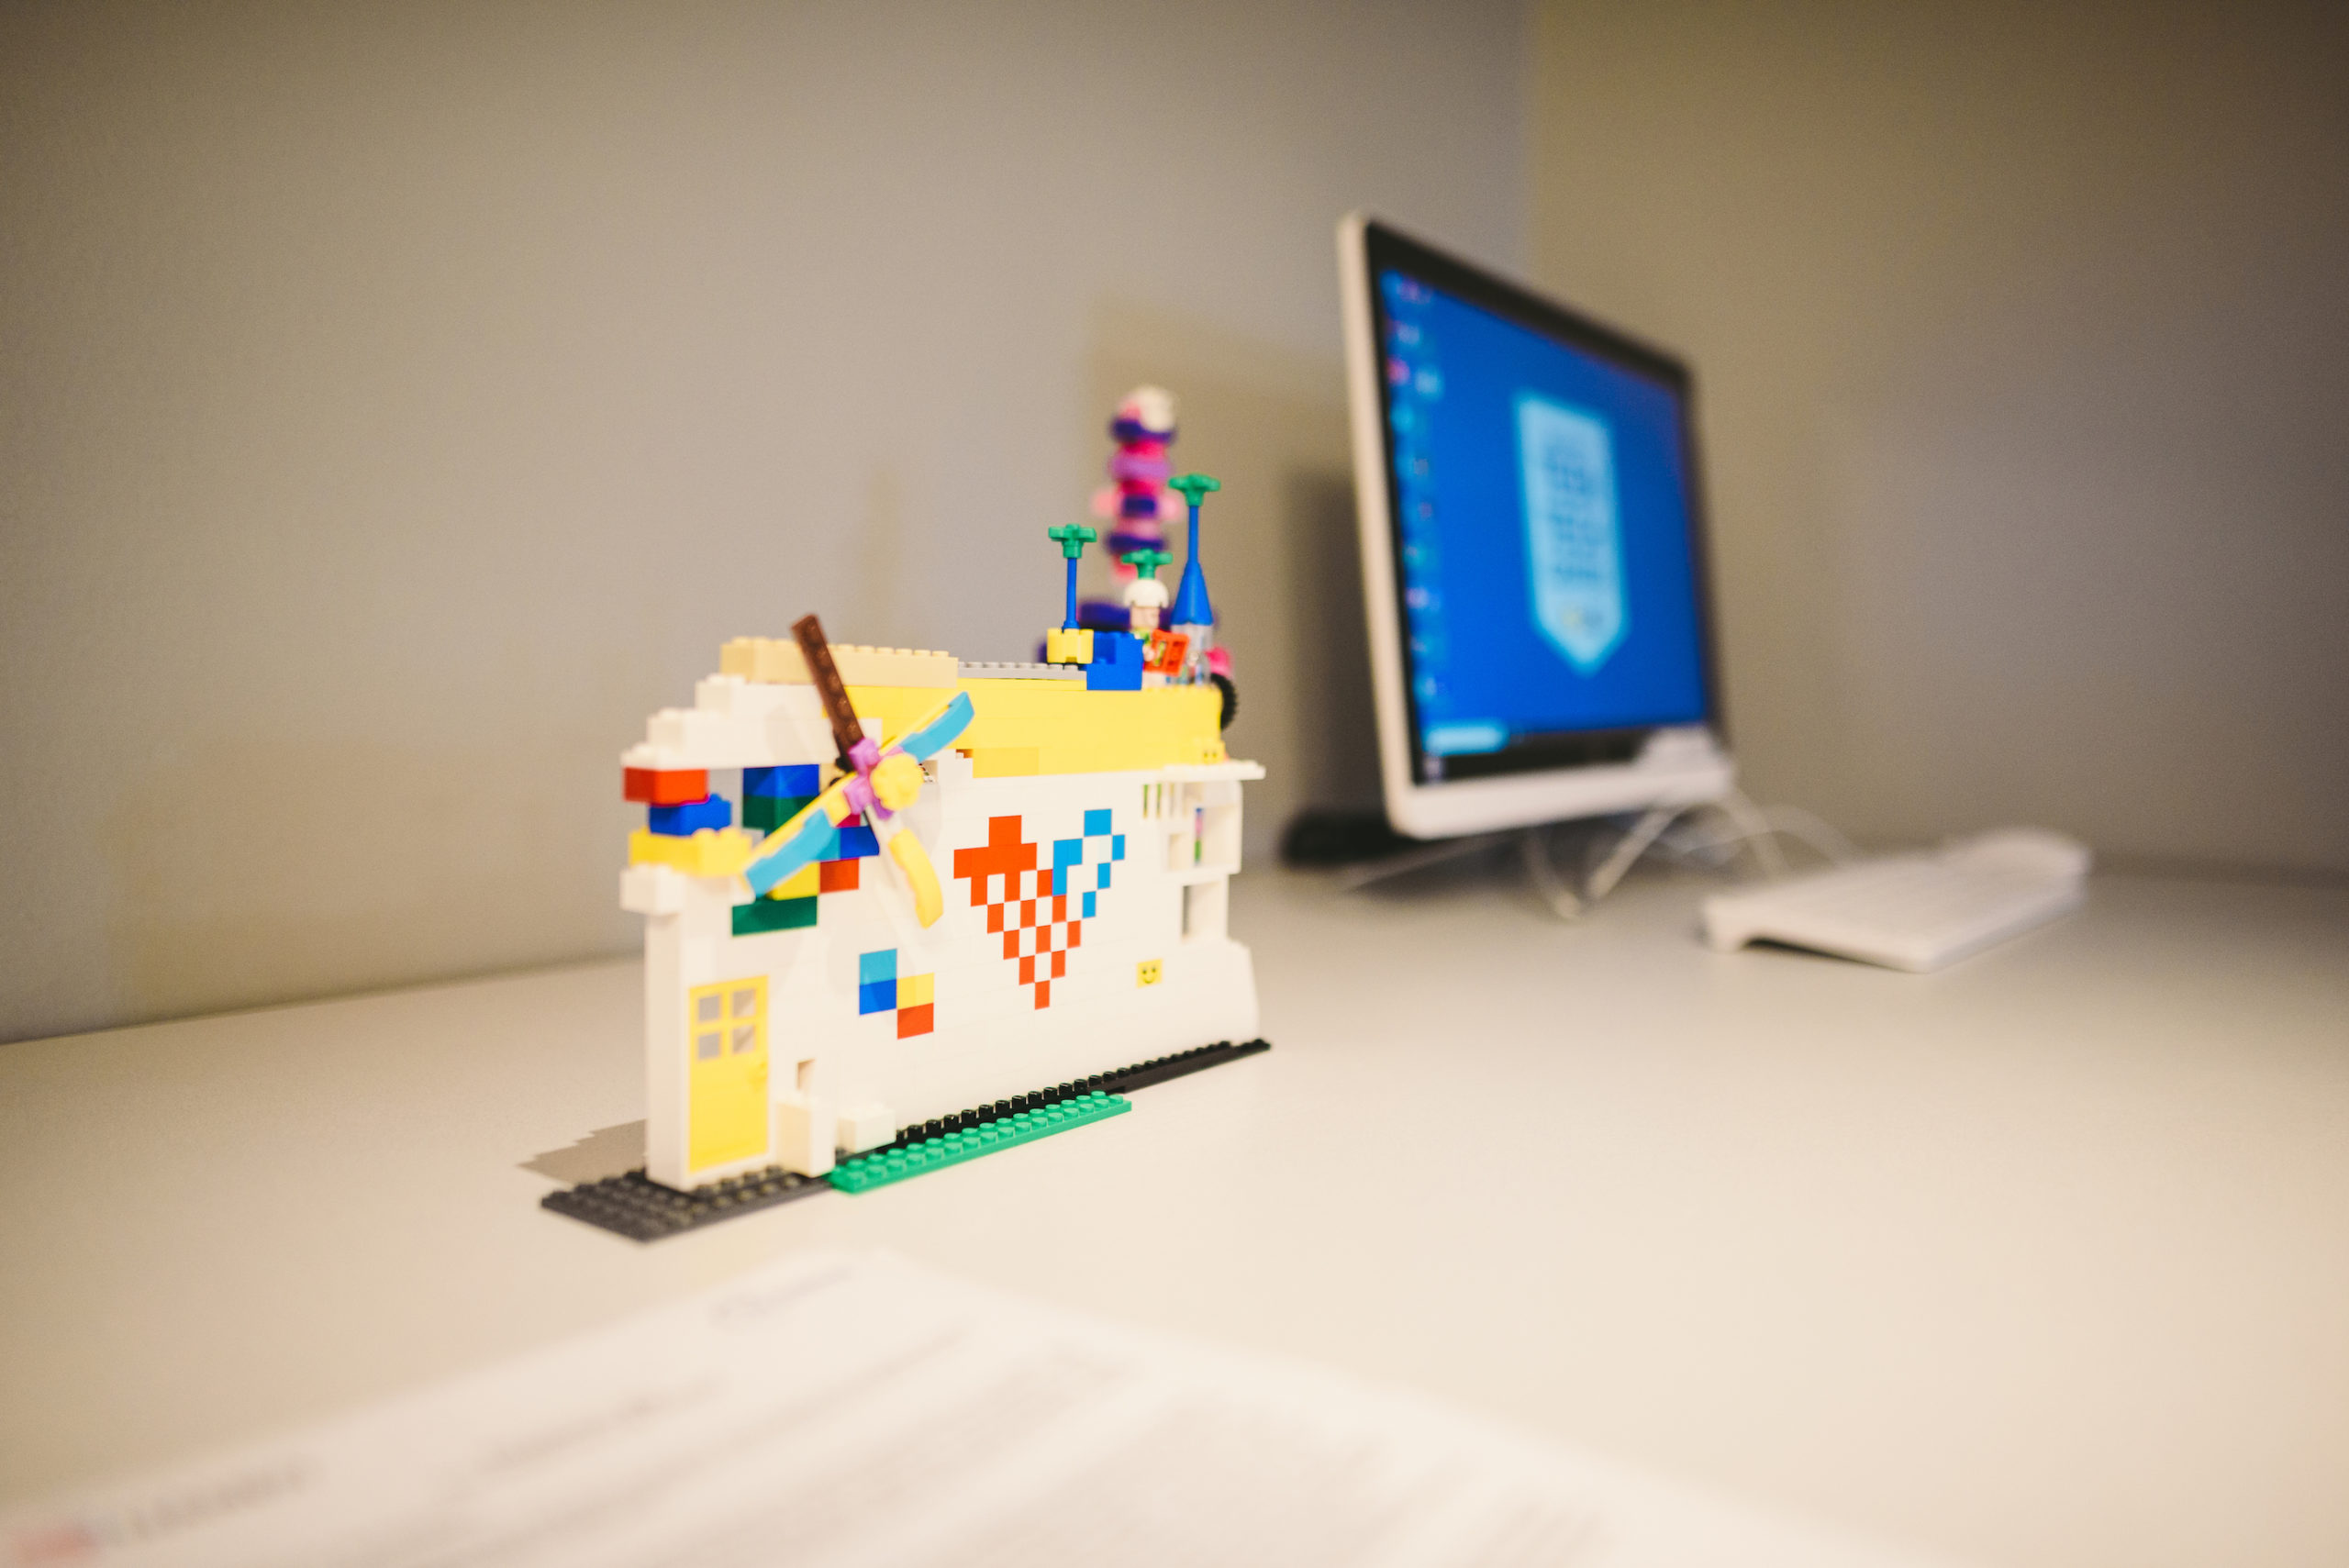 Handy NonProfit Lego structure next to desktop